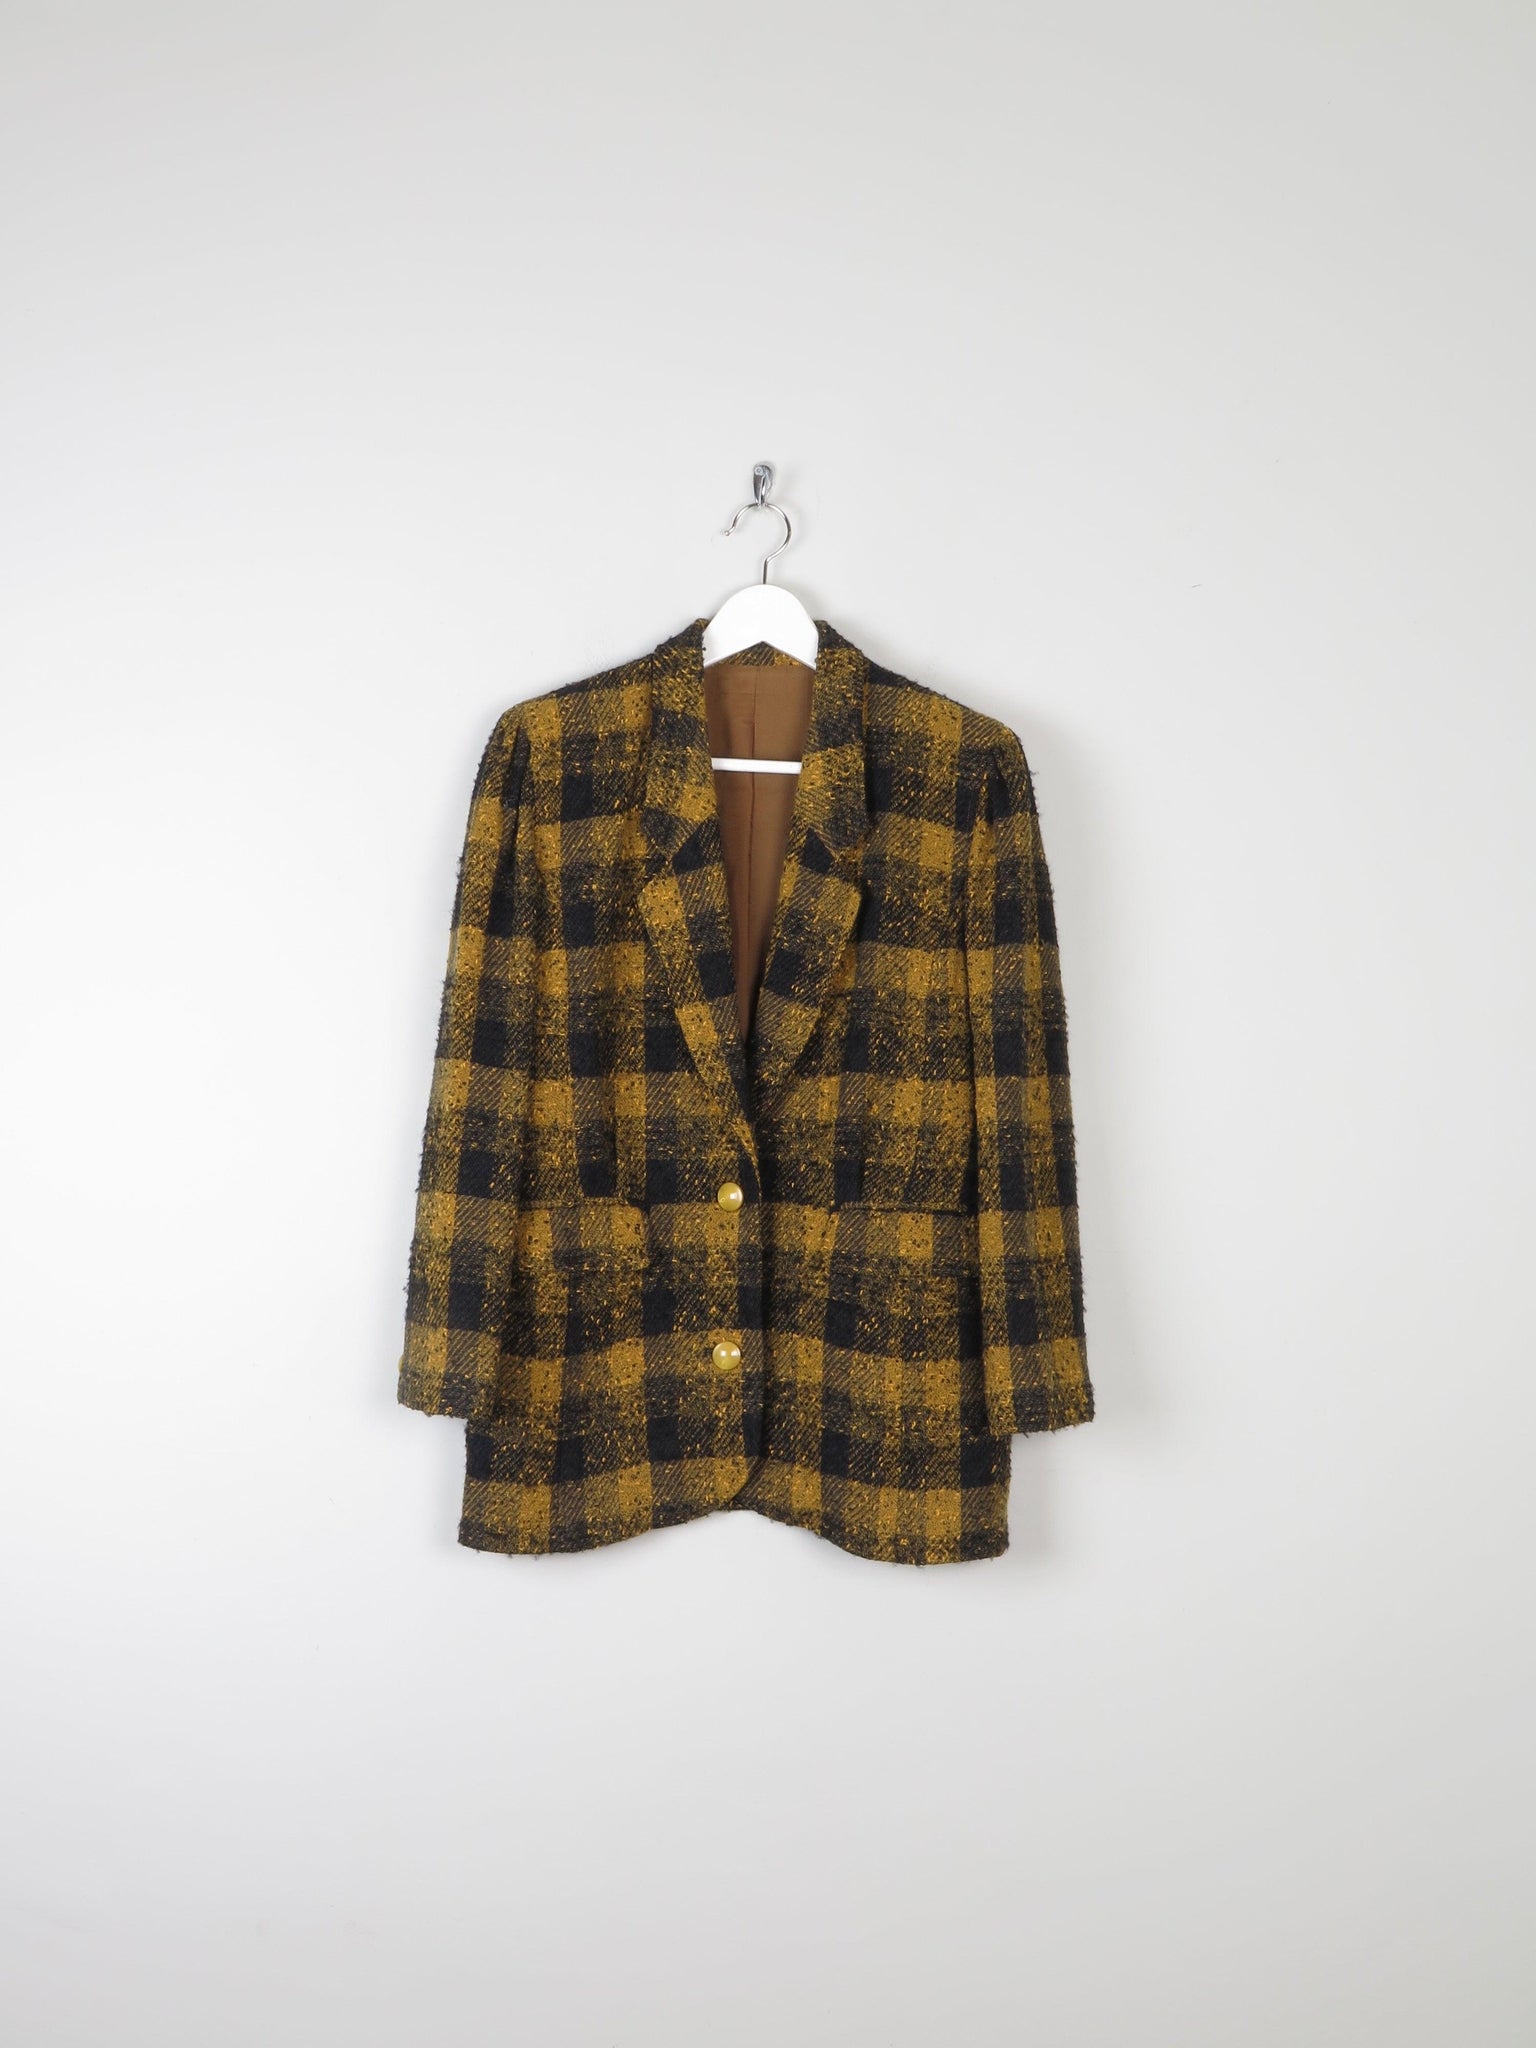 Women’s Tweed Mustard & Black  Jacket 10/12 *S/M Sleeve Length * - The Harlequin